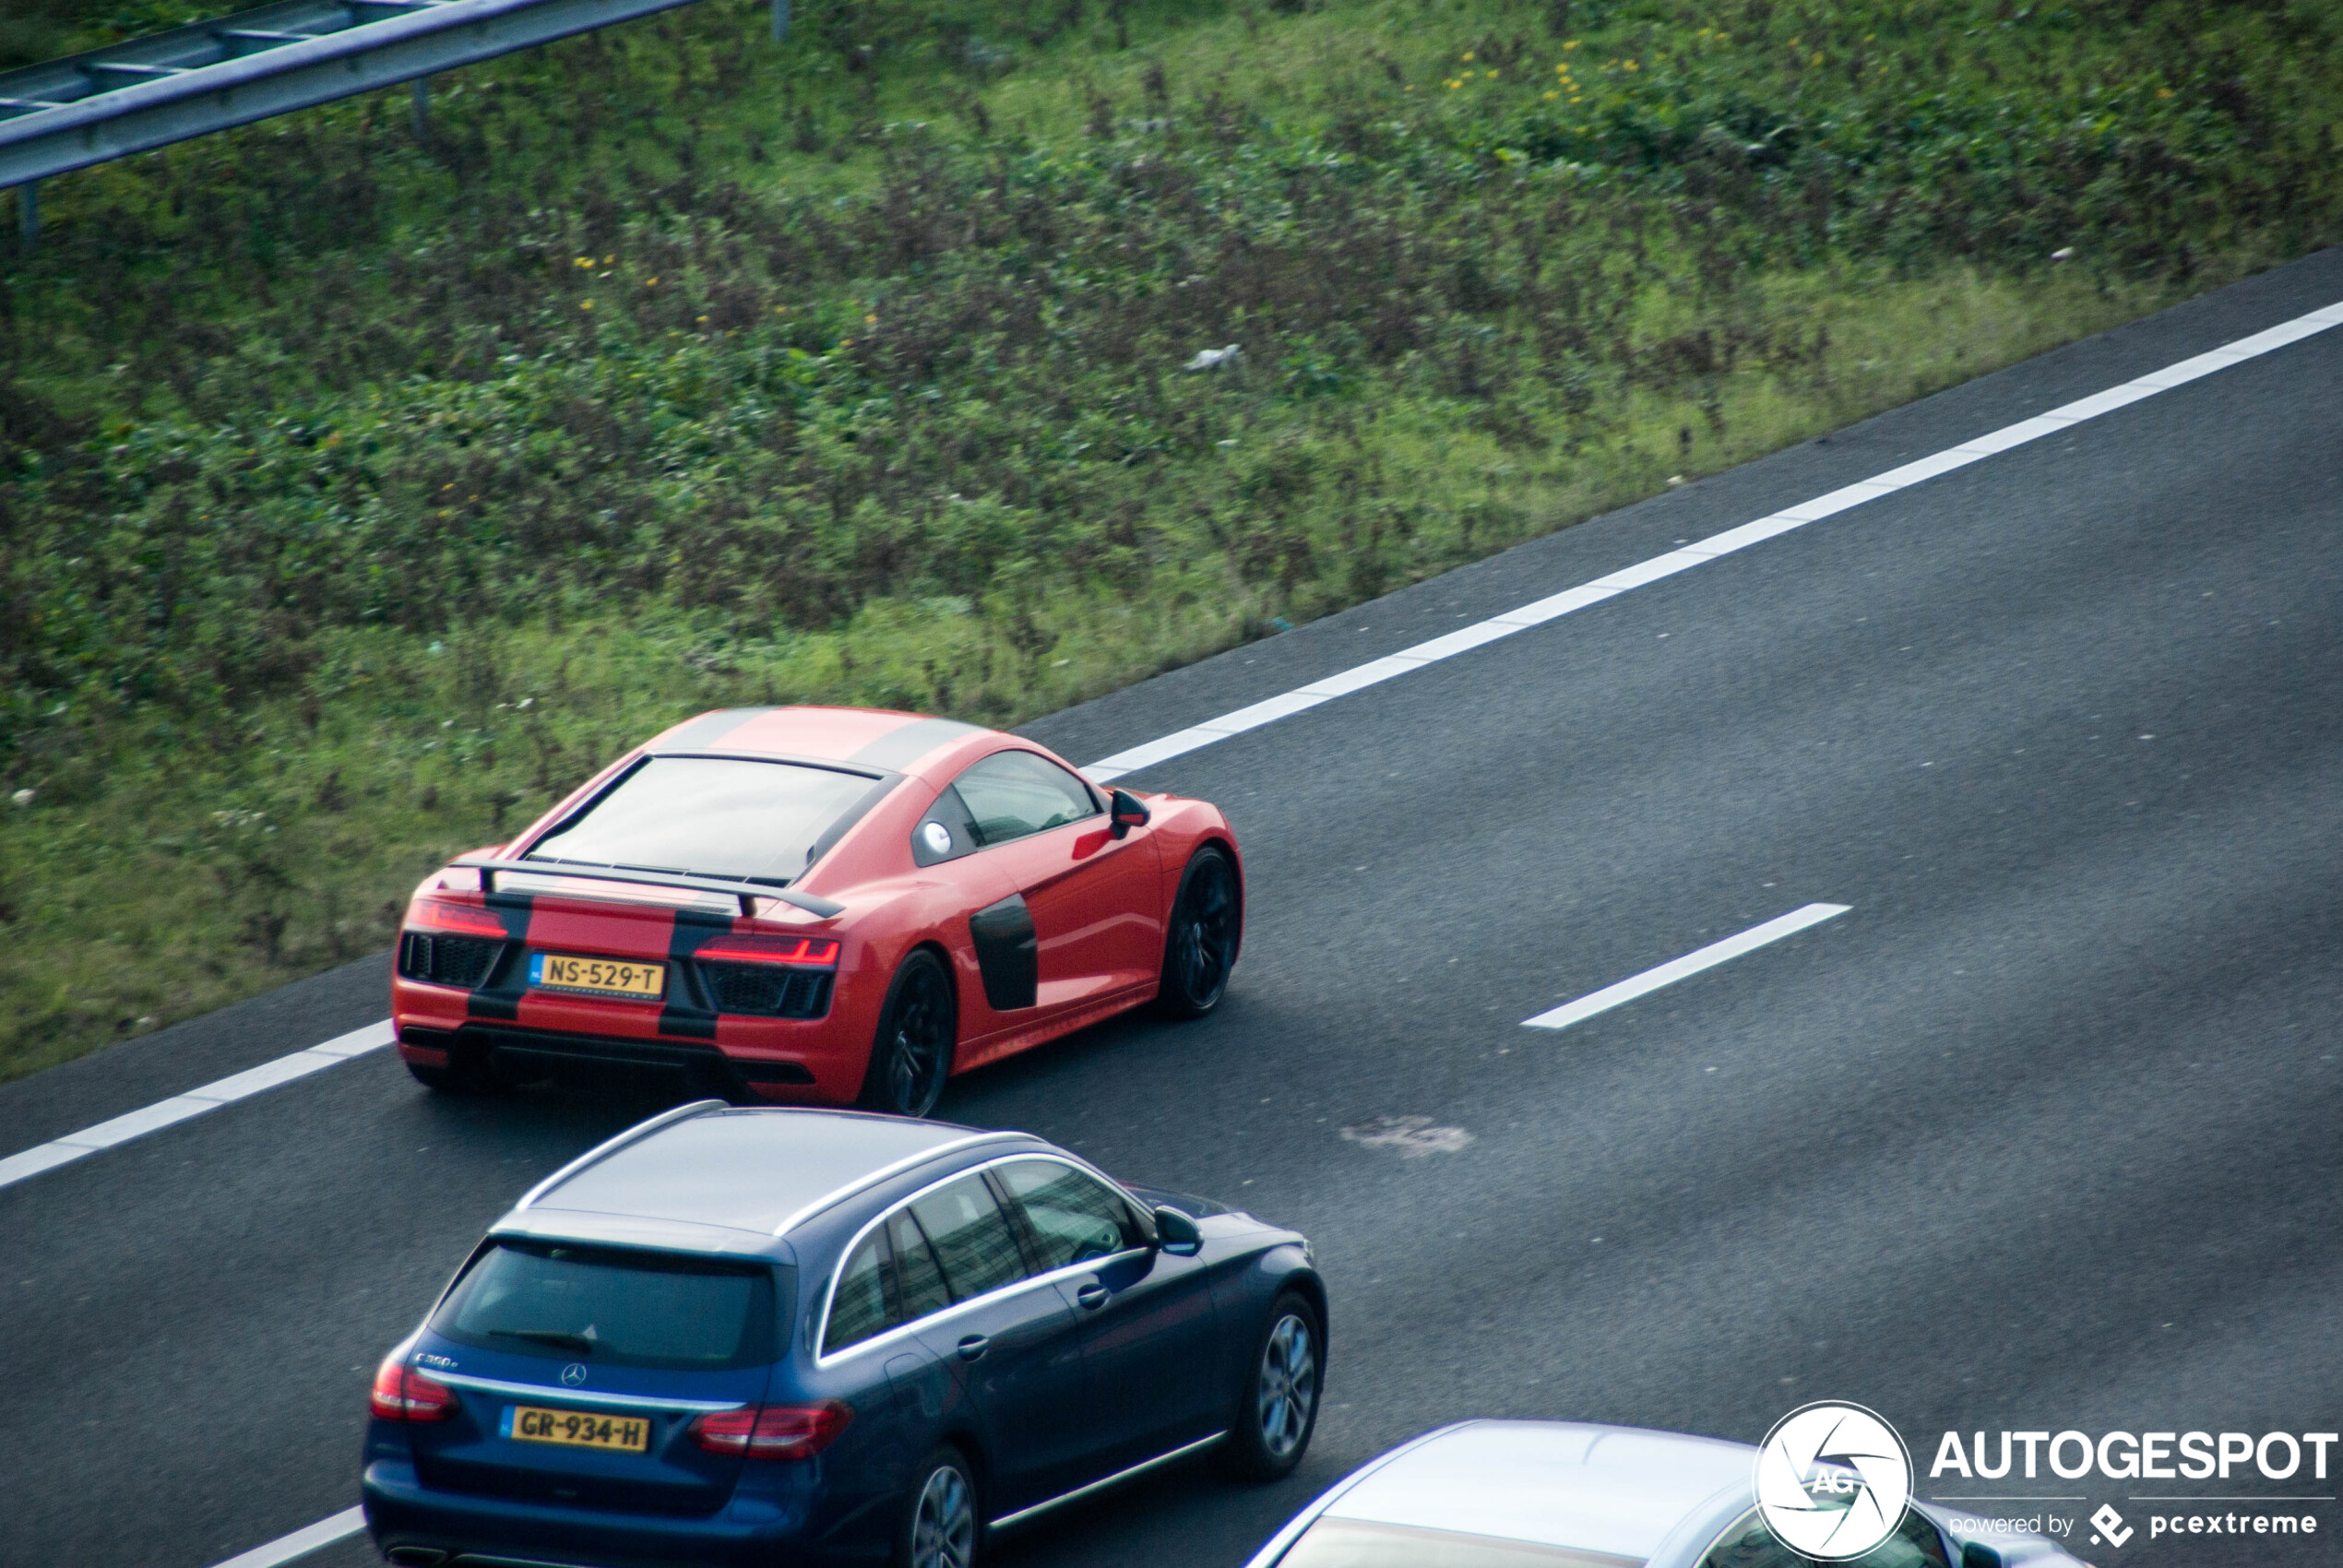 Rode Audi R8 springt eruit op de A4